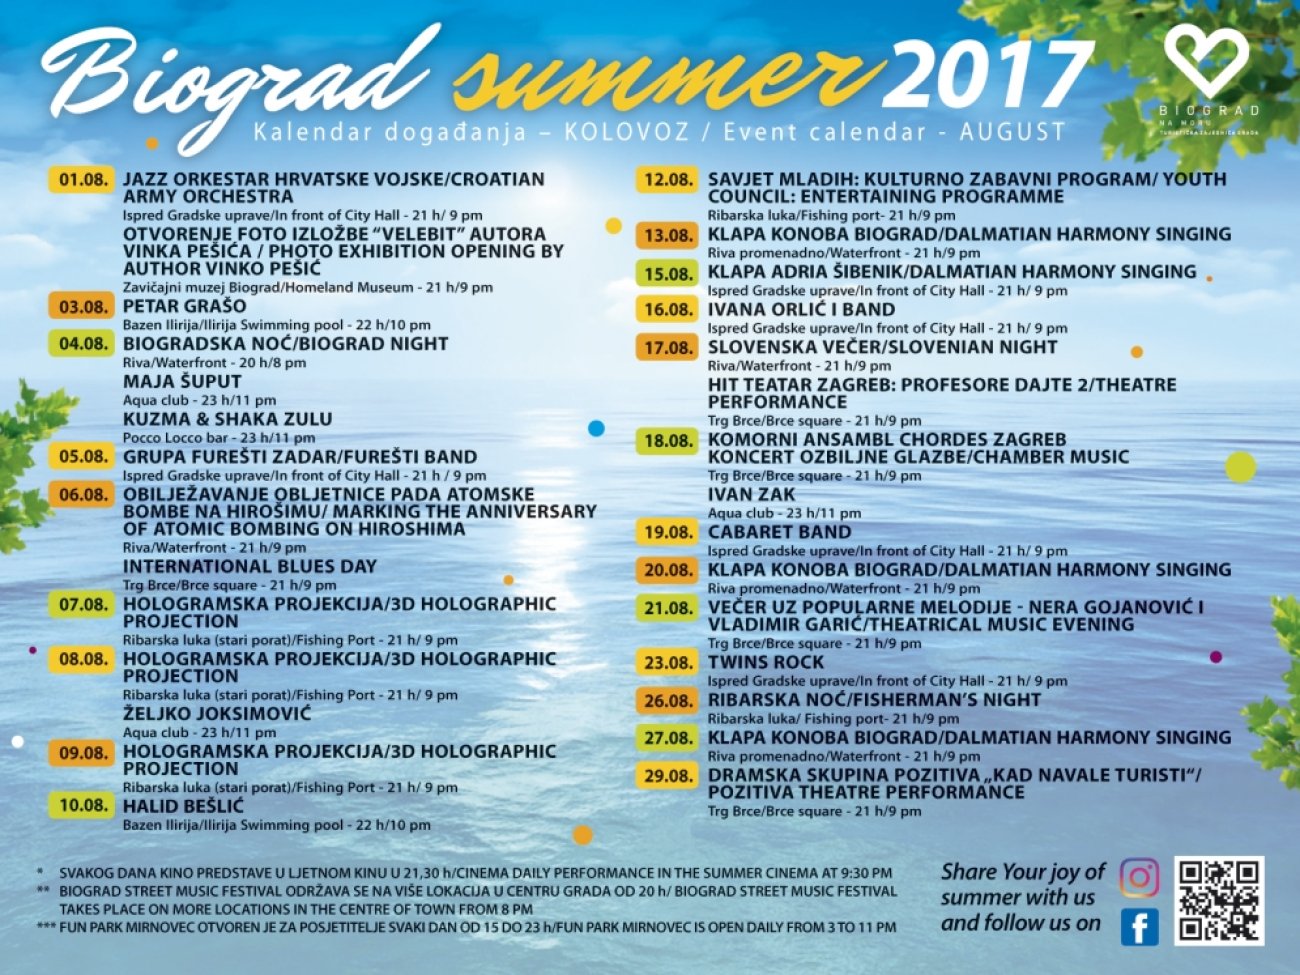 Biograd summer 2017. - Kalendar događanja - kolovoz 2017 / Event calendar - August 2017